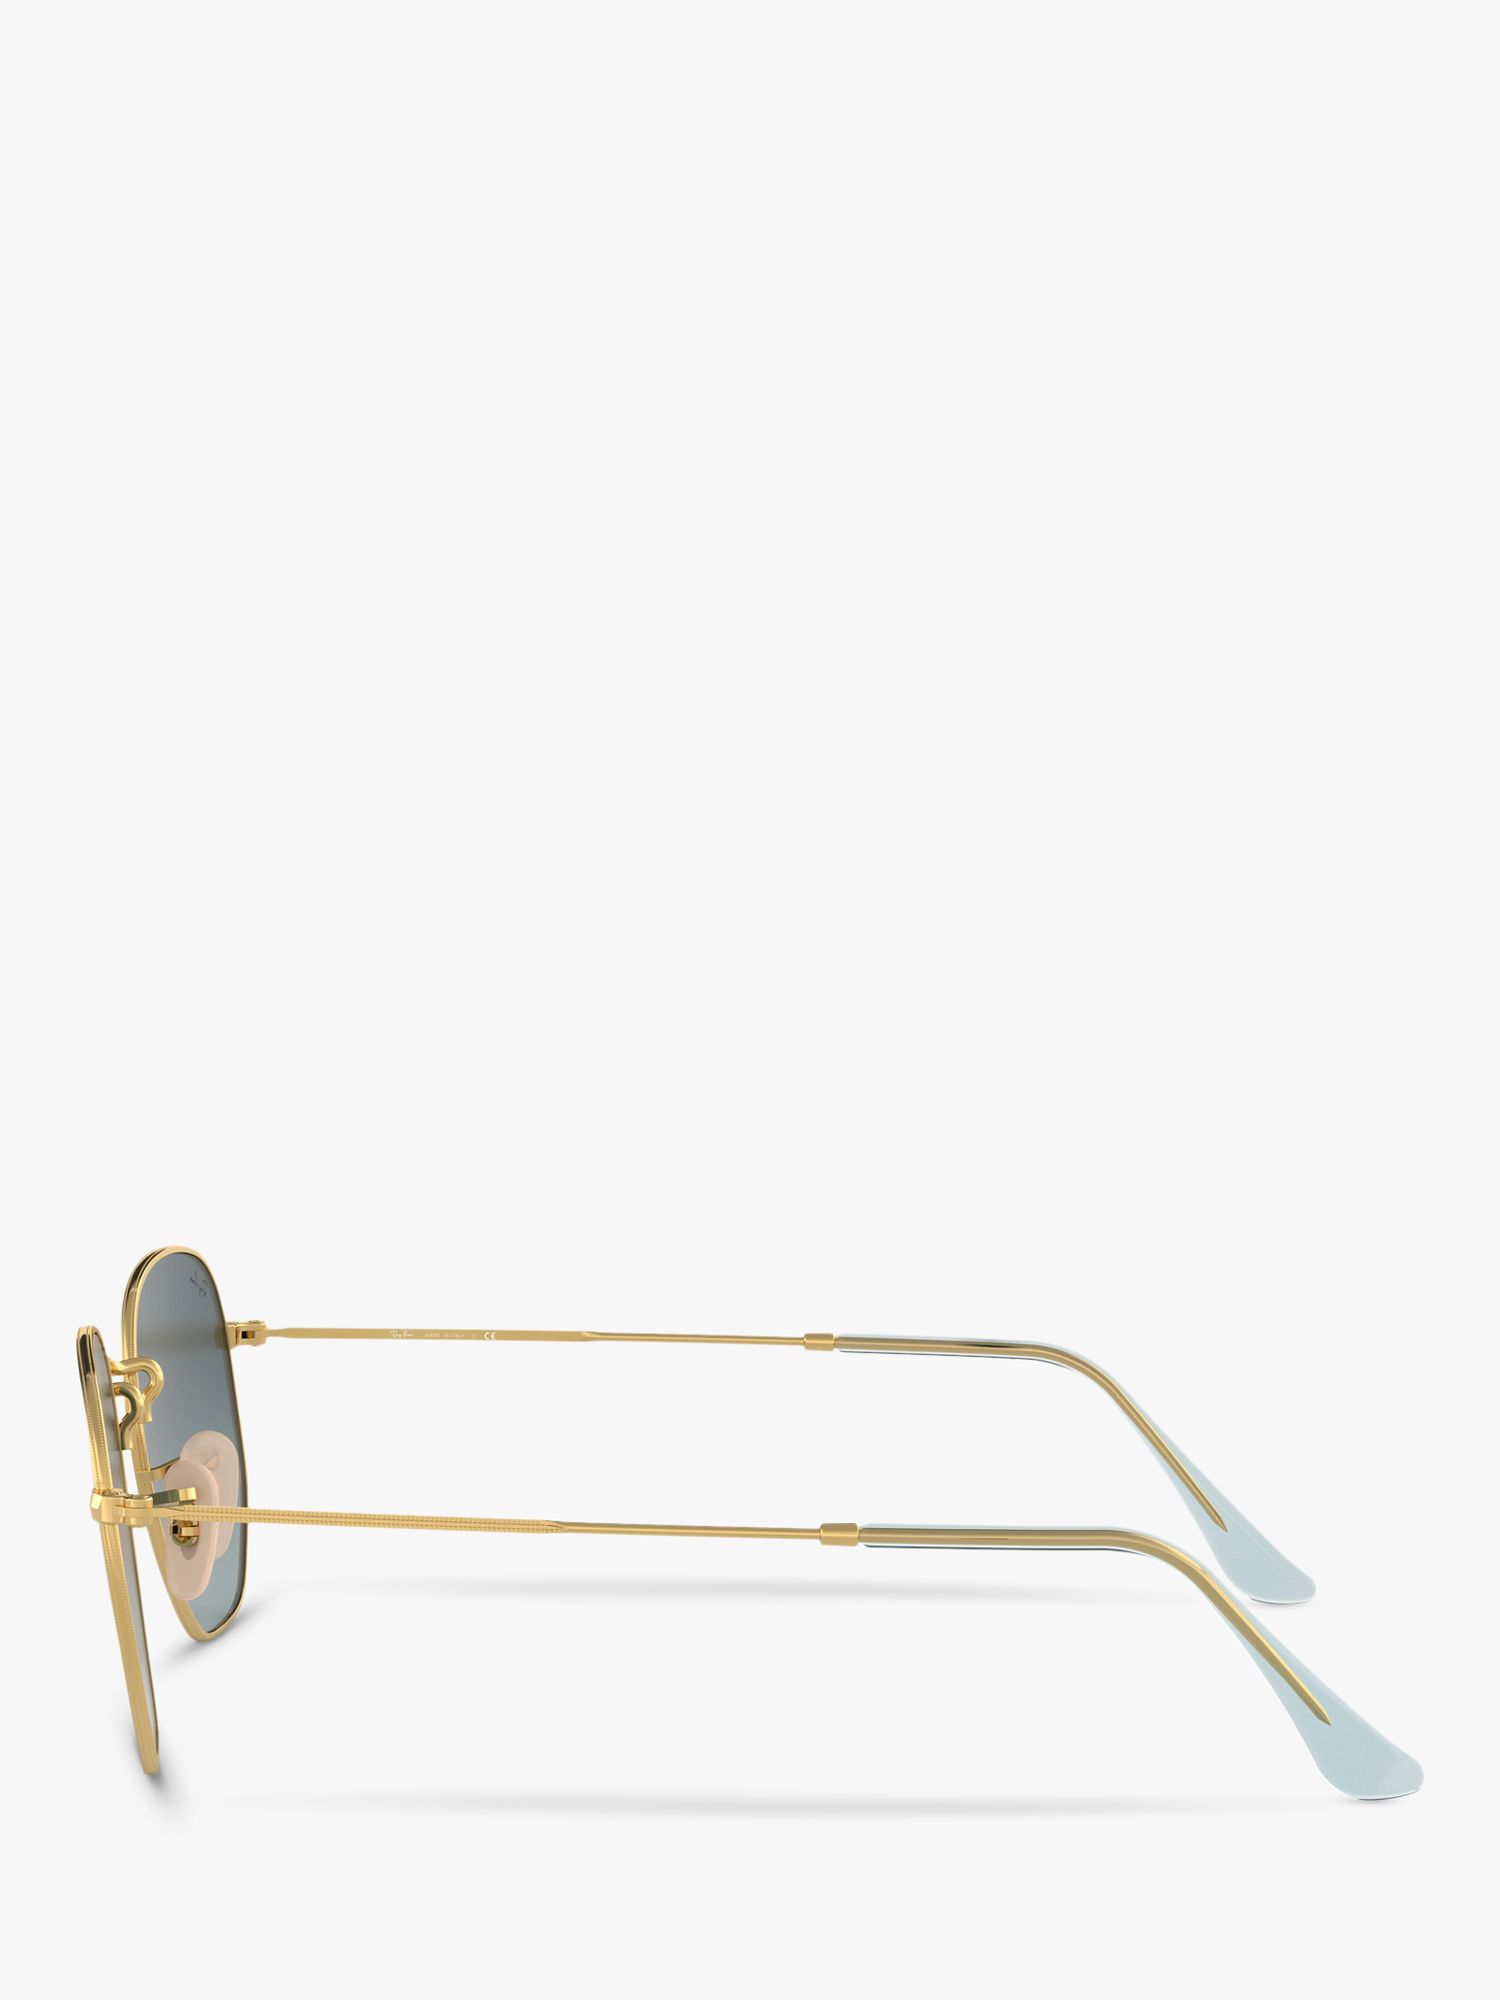 Buy Ray-Ban RB3548N Unisex Hexagonal Sunglasses, Gold/Blue Gradient Online at johnlewis.com